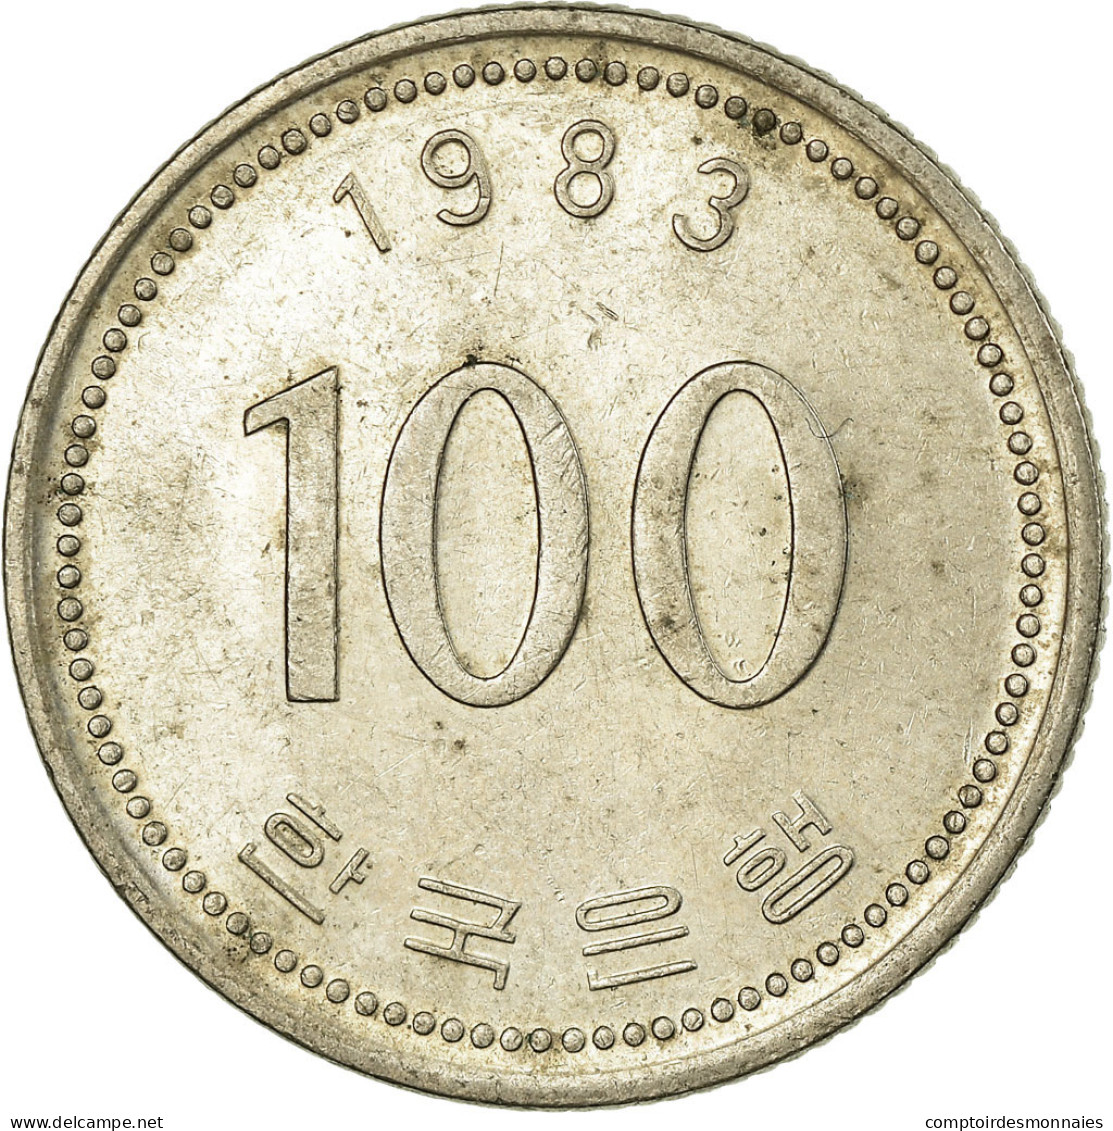 Monnaie, KOREA-SOUTH, 100 Won, 1983, TTB, Copper-nickel, KM:35.1 - Corea Del Sud